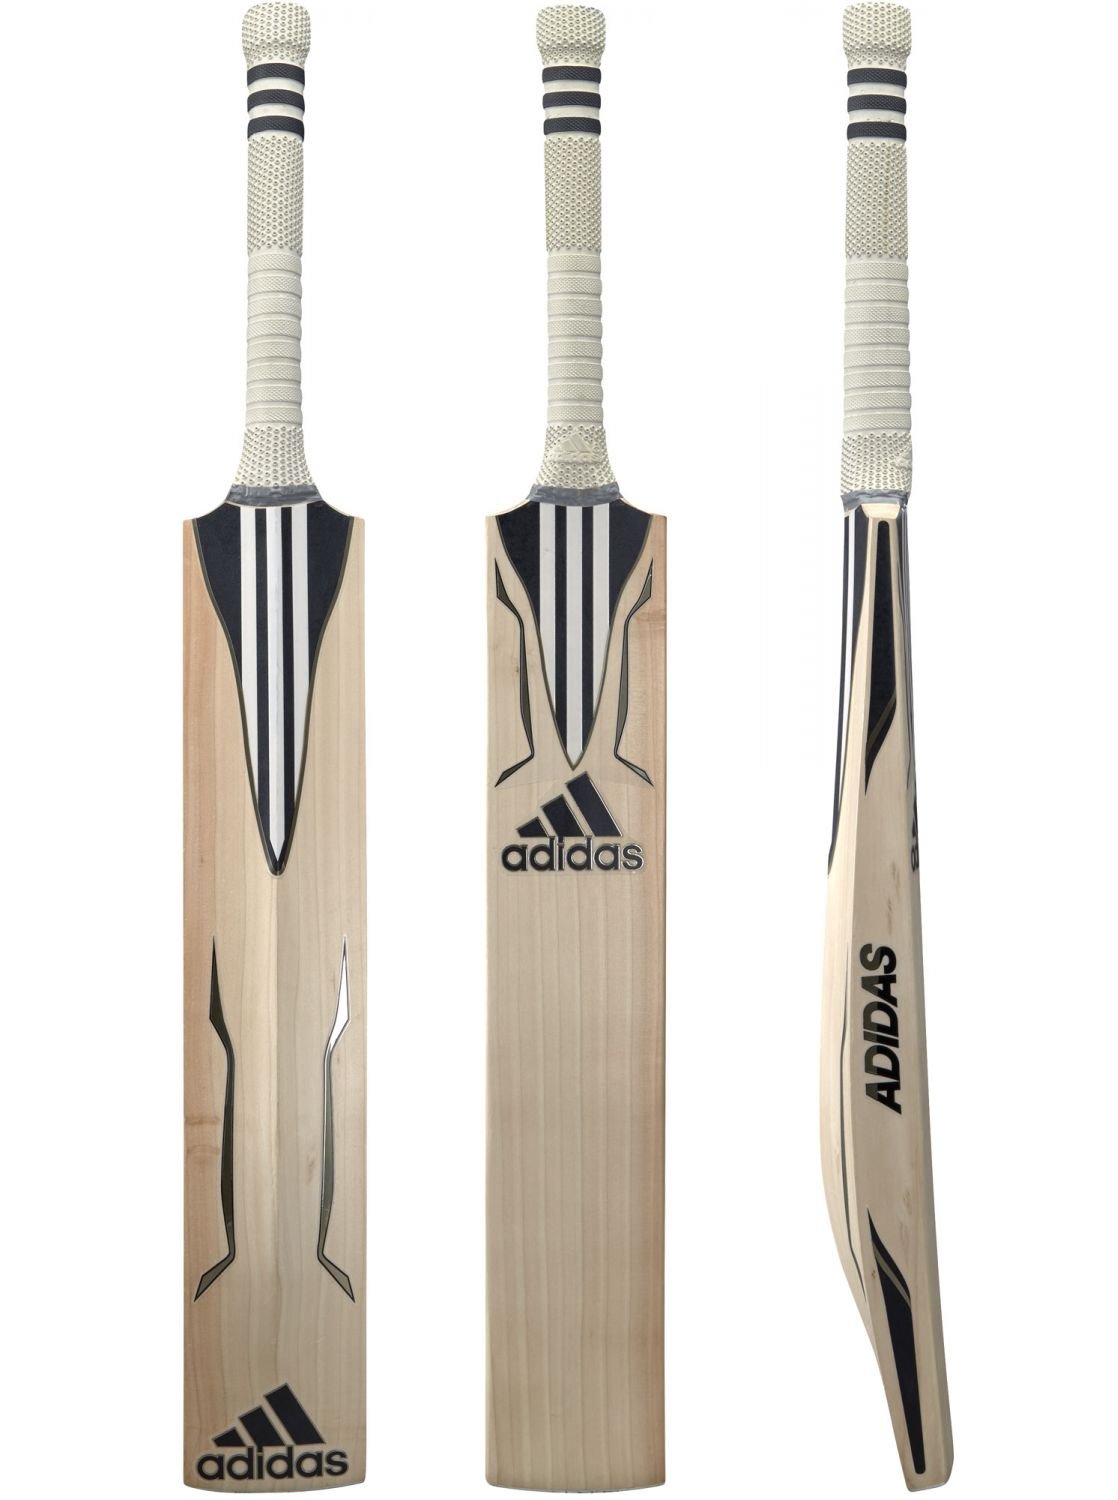 adidas cricket equipment